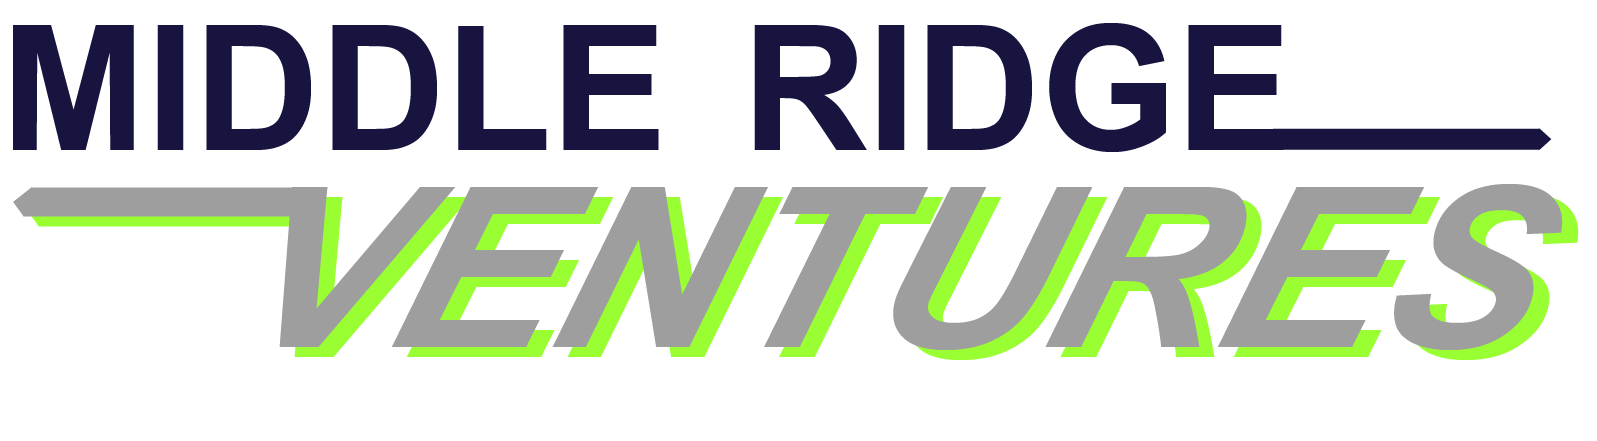 Middle Ridge Ventures Logo